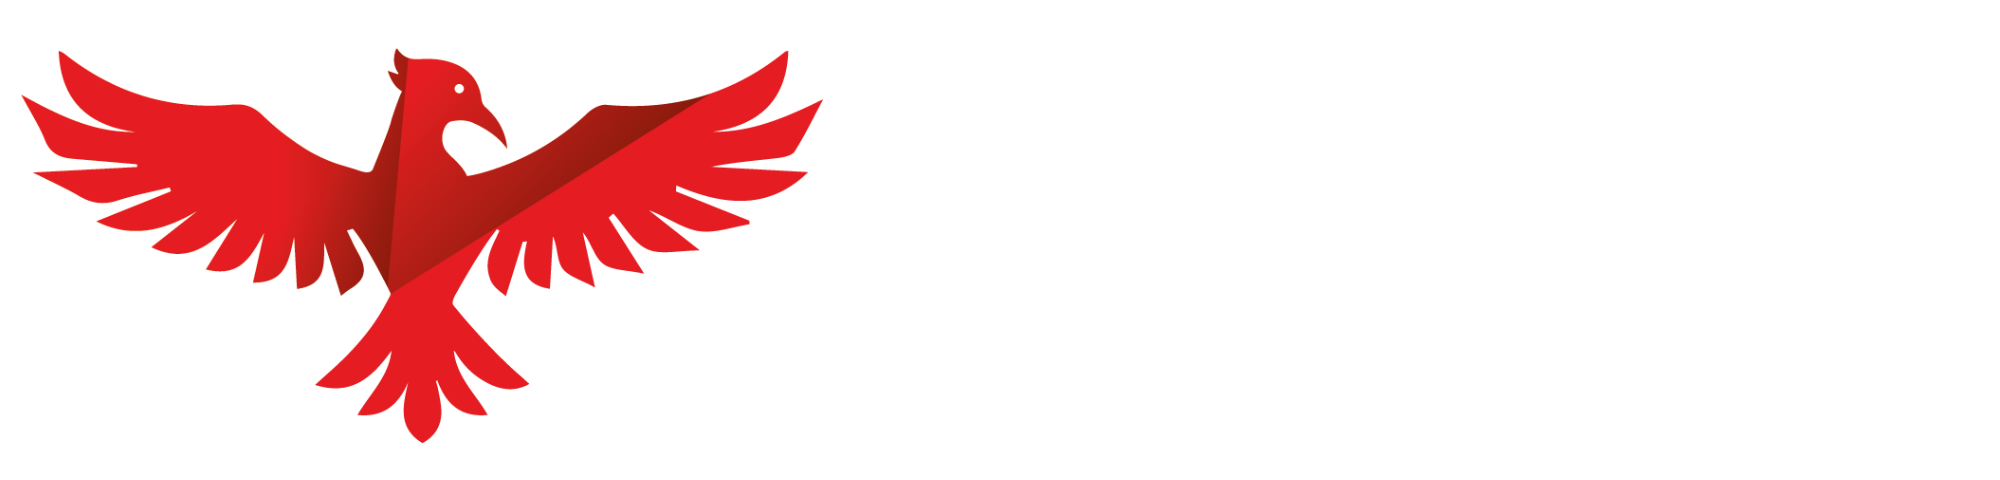 David Goerke Solutions Logo